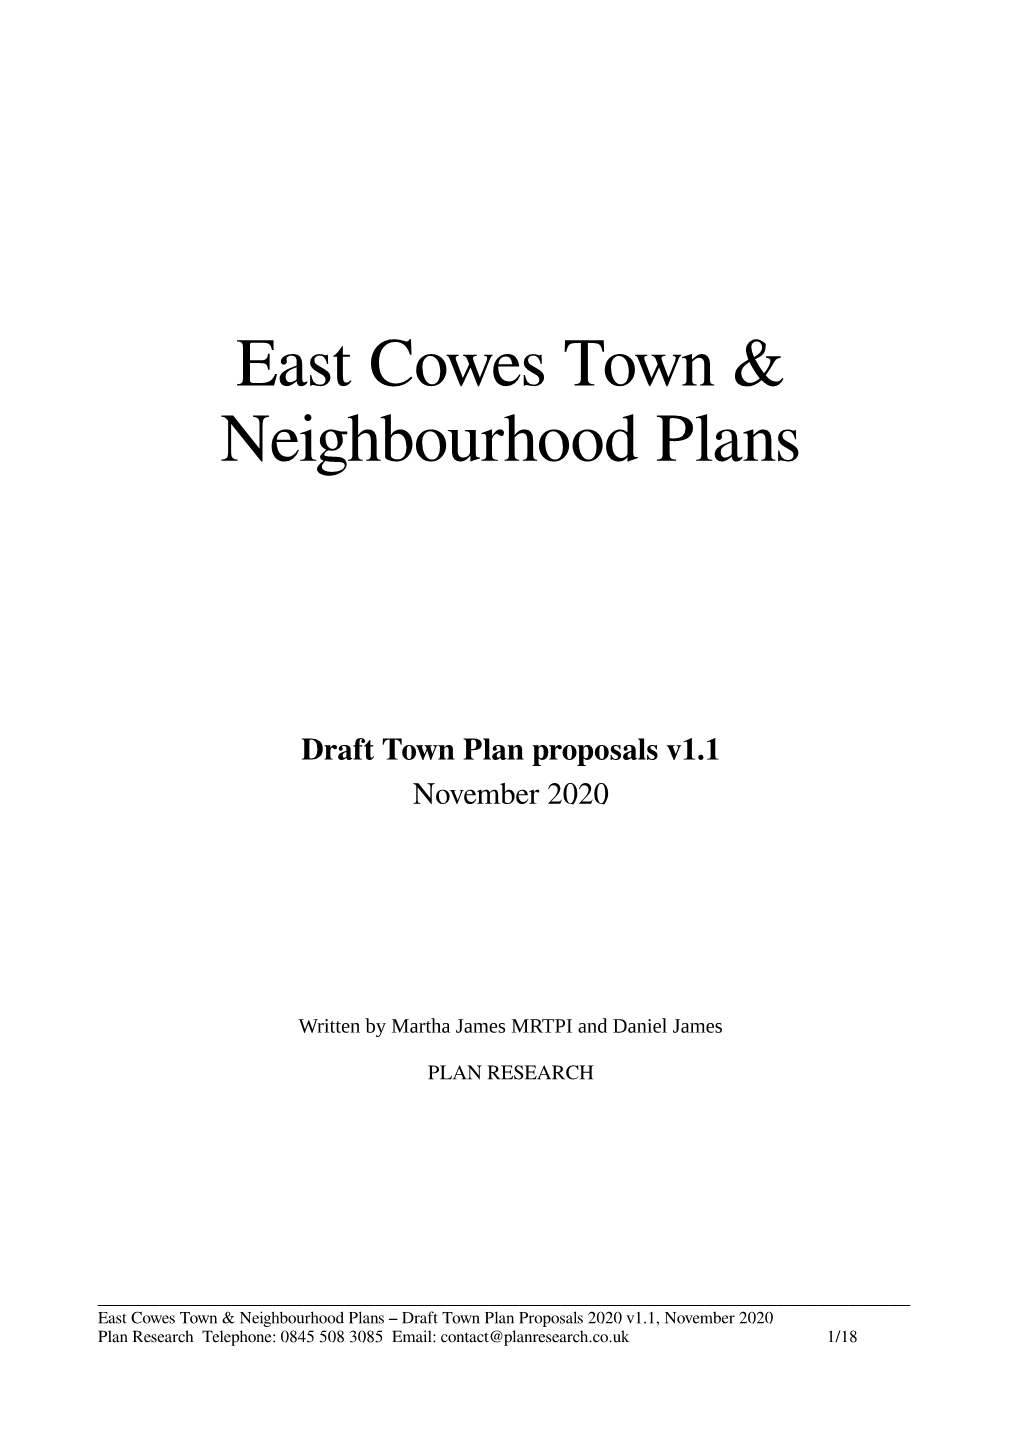 East Cowes Town & Neighbourhood Plans